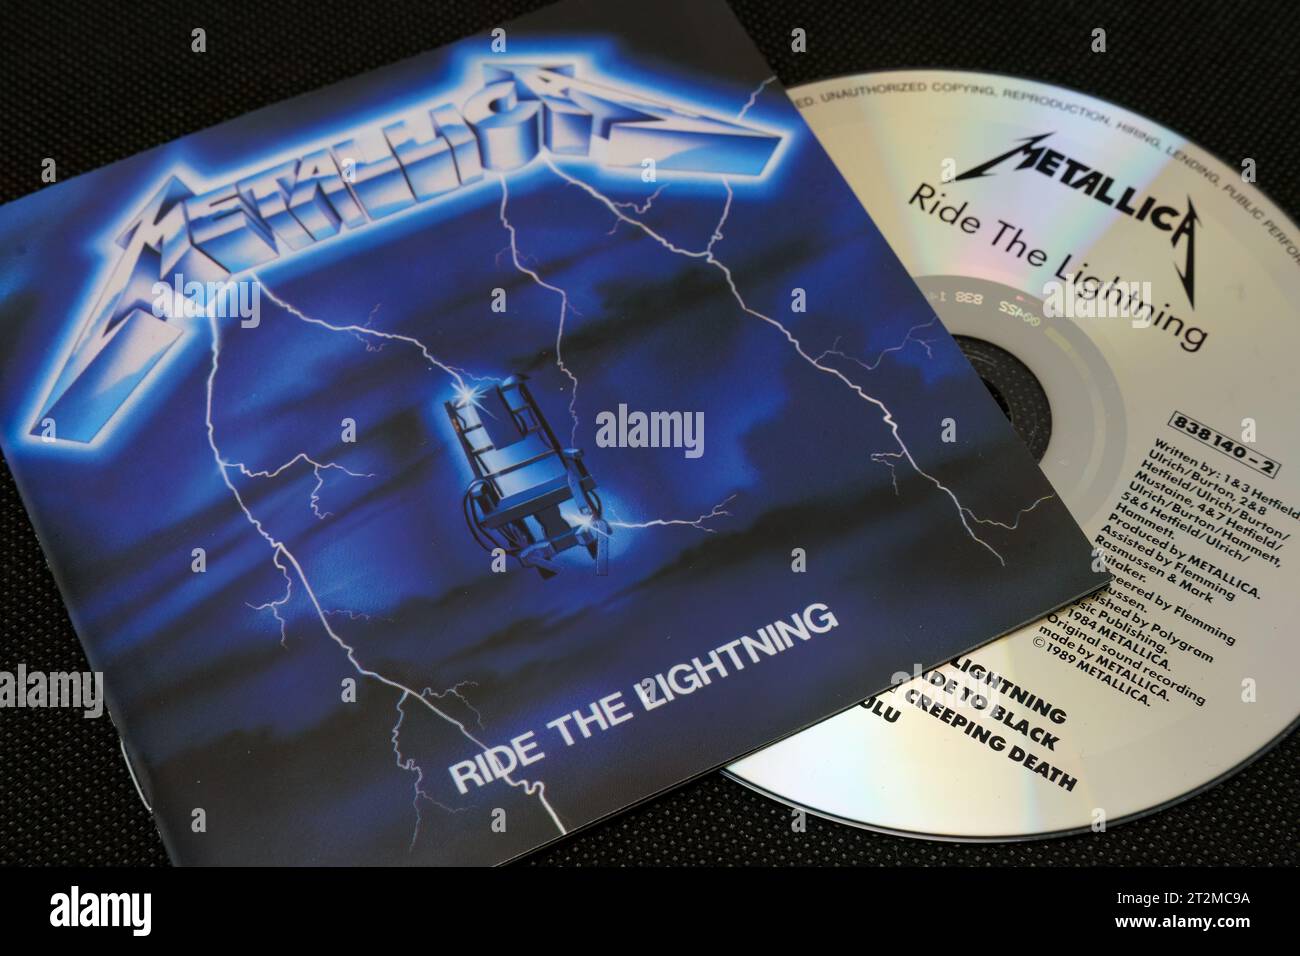 Metallica ride the Lightning Cd Editorial Stock Image - Image of